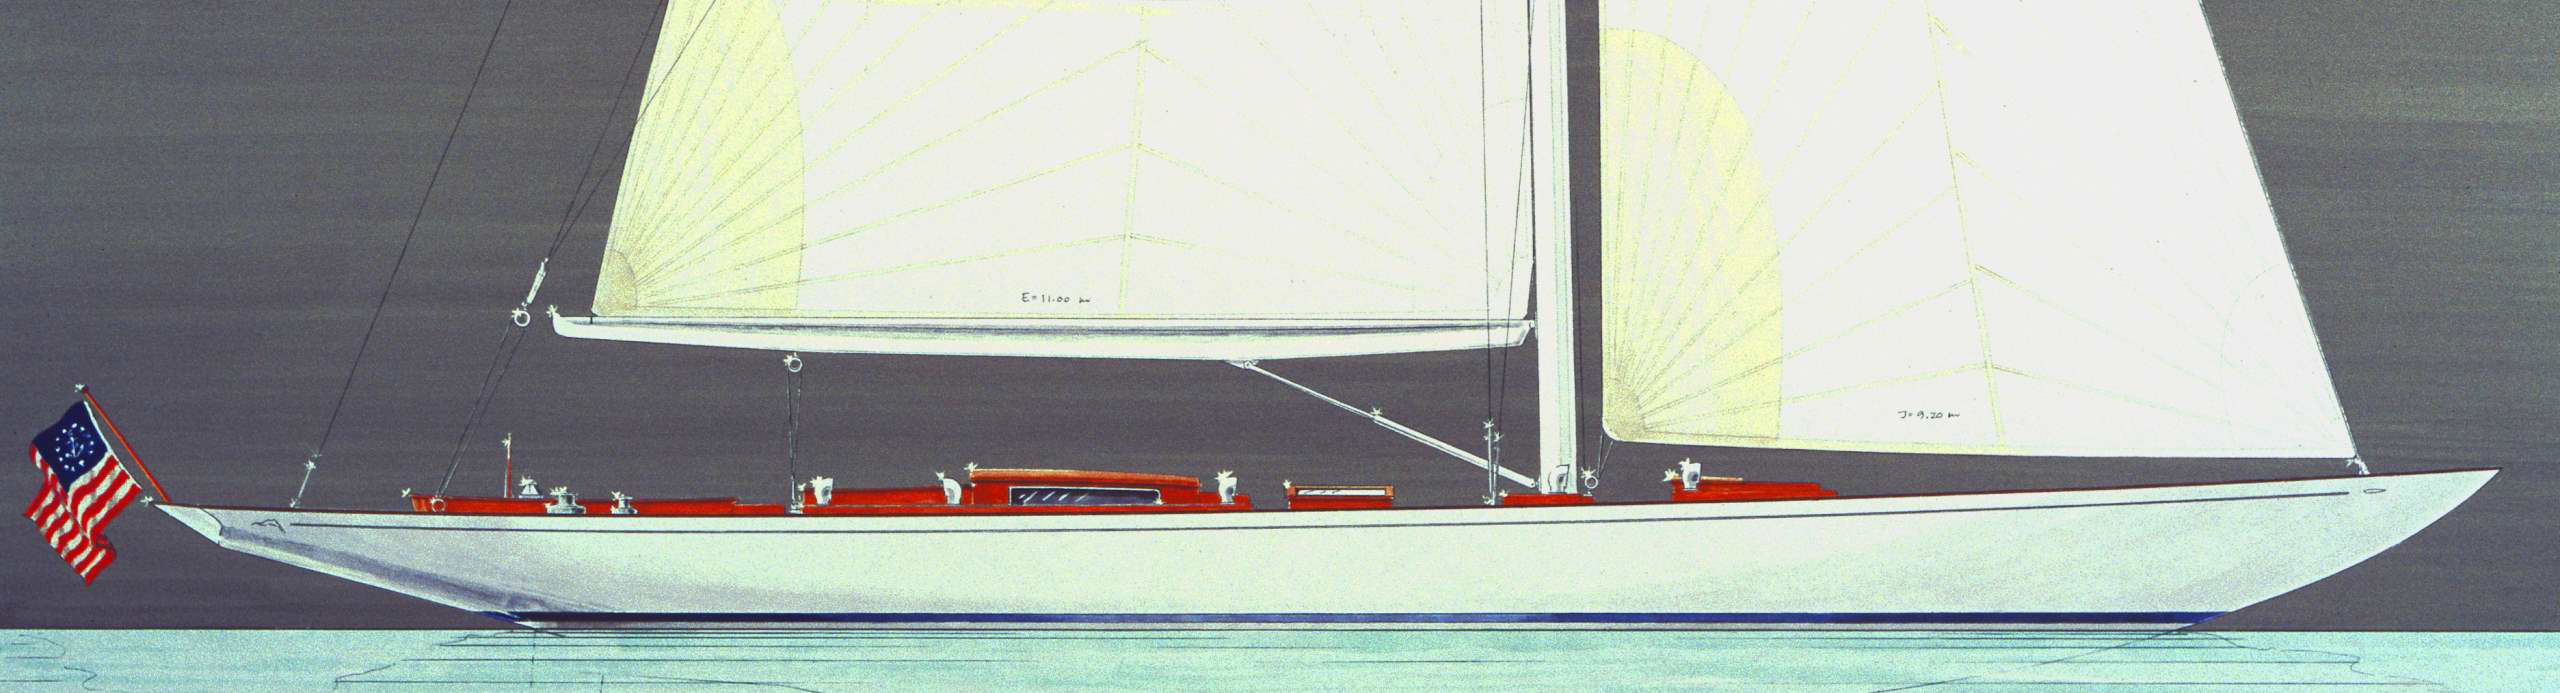 90' Classic, (c) Heyman Yachts